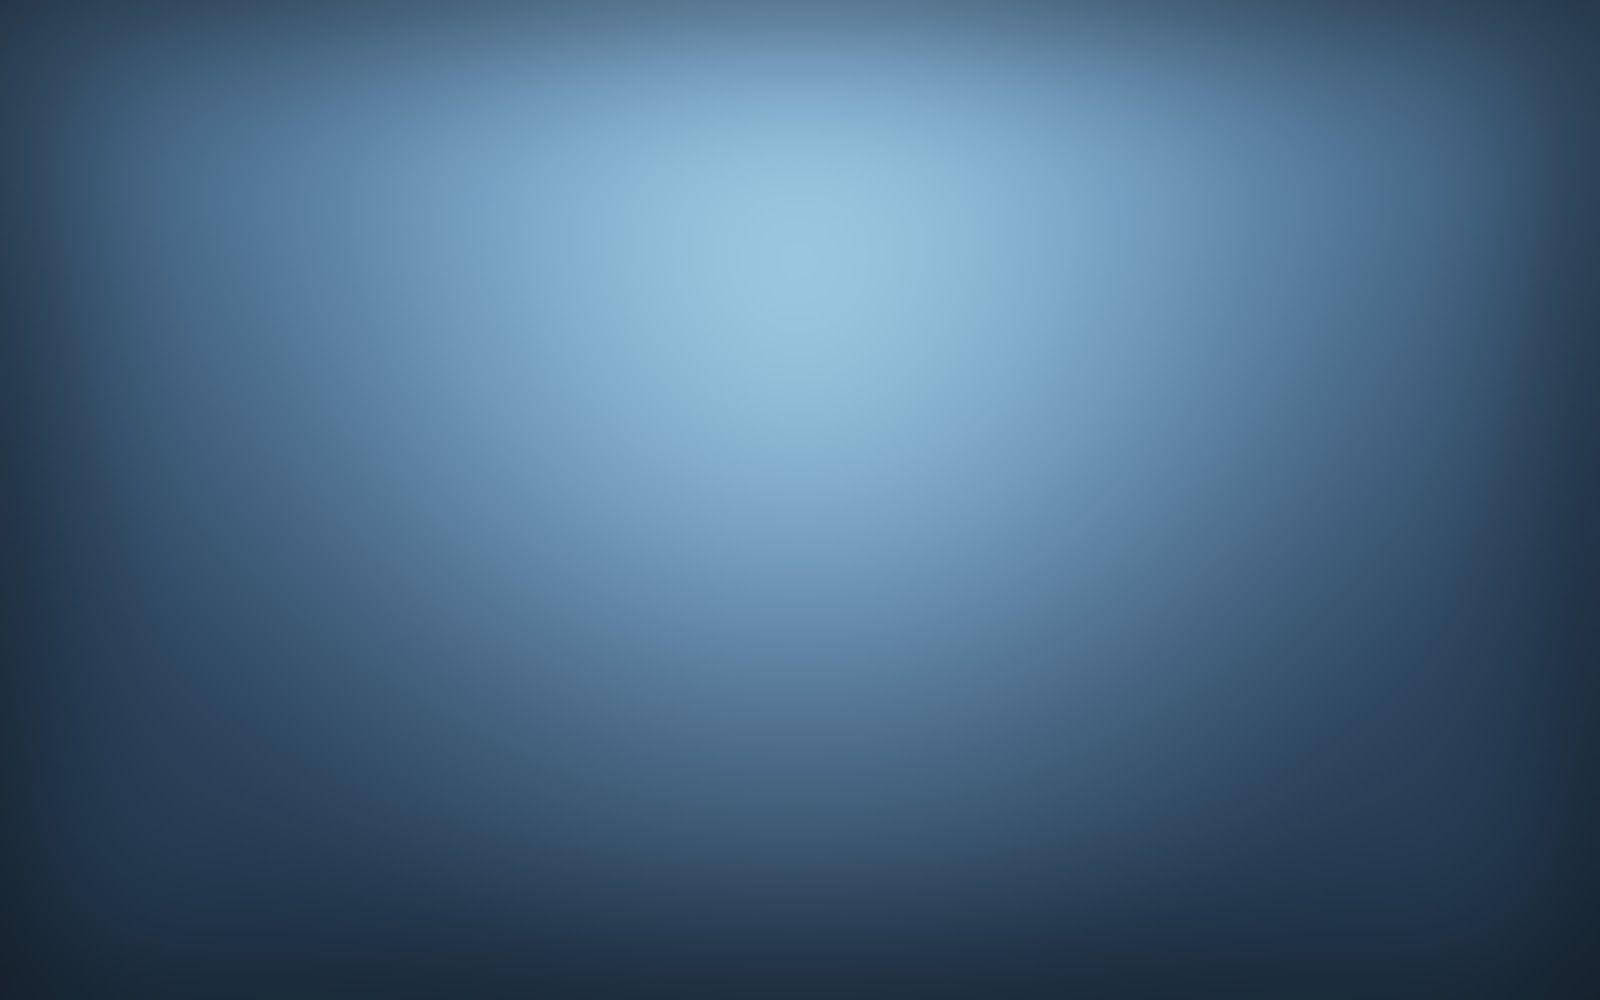 Dark Blue Gradient Image With A Plain Background Background